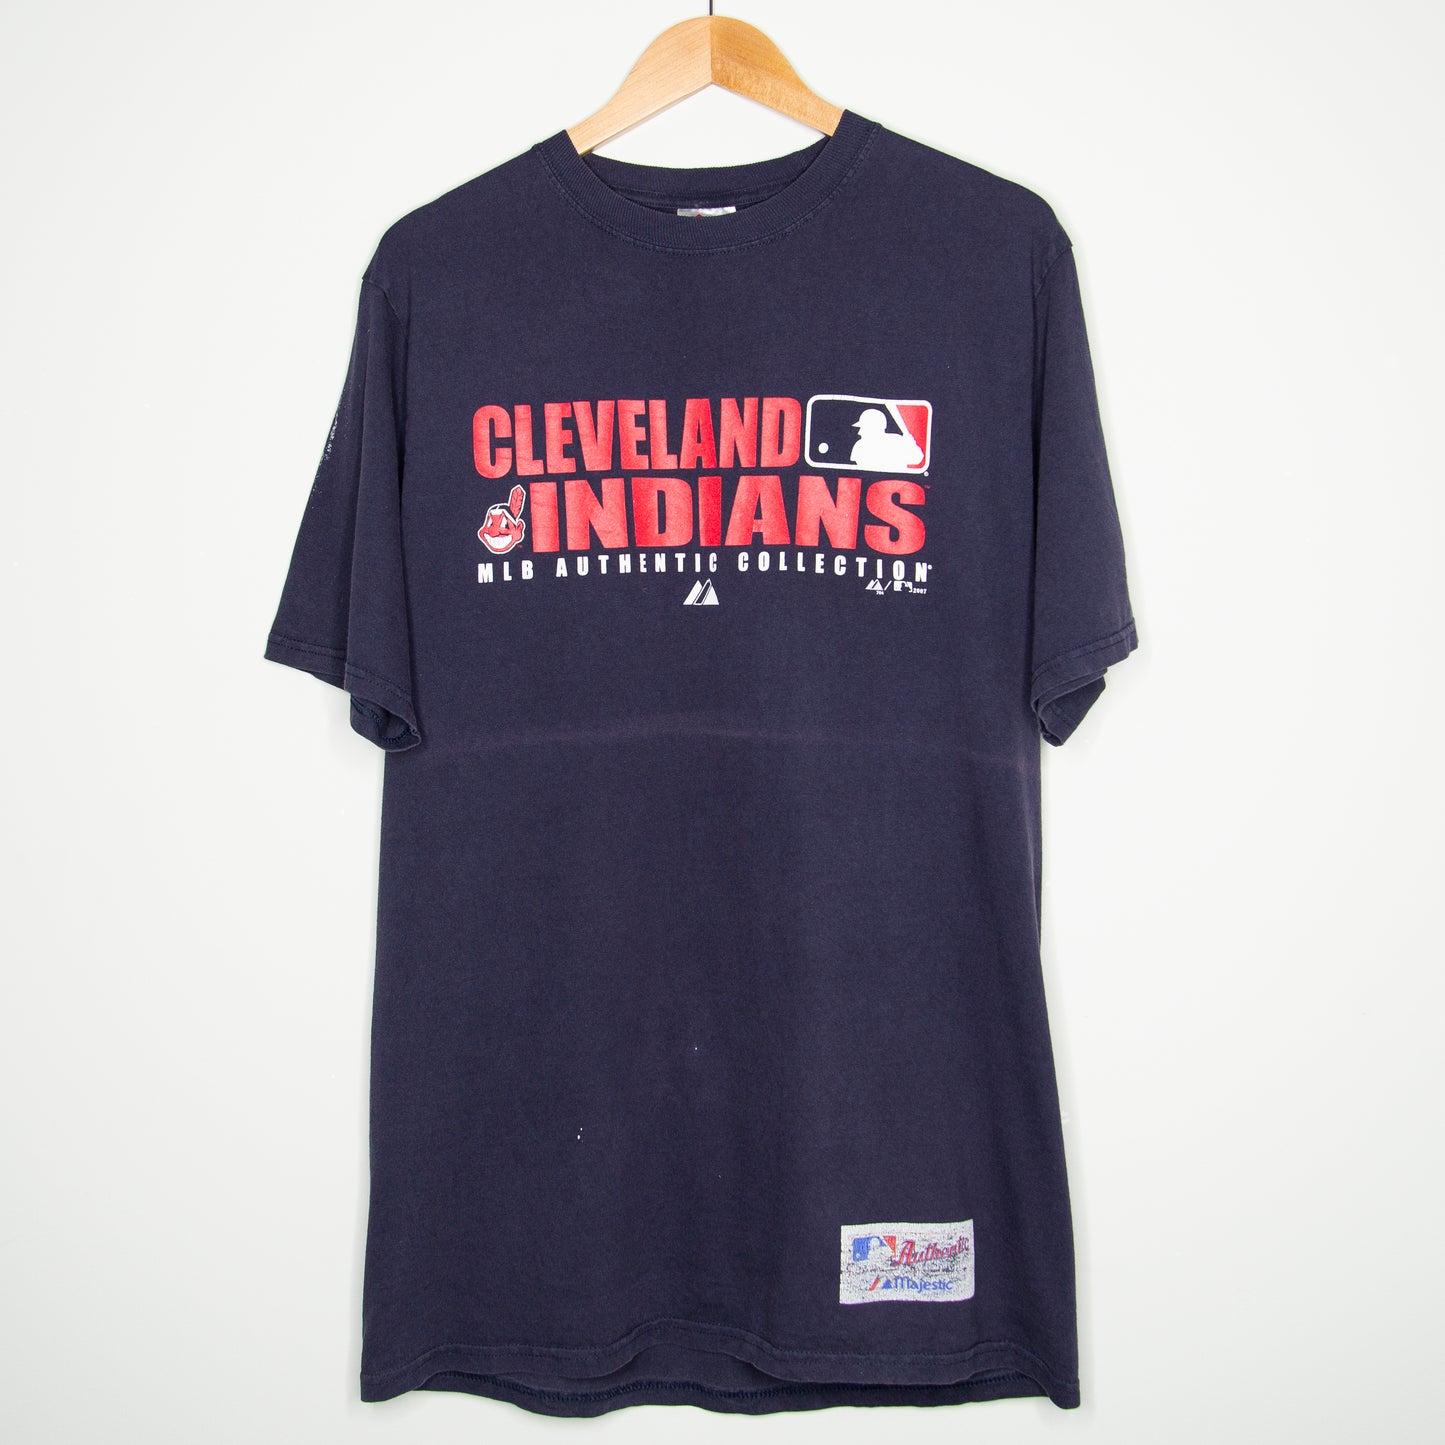 2007 Cleveland Indians T-Shirt Large